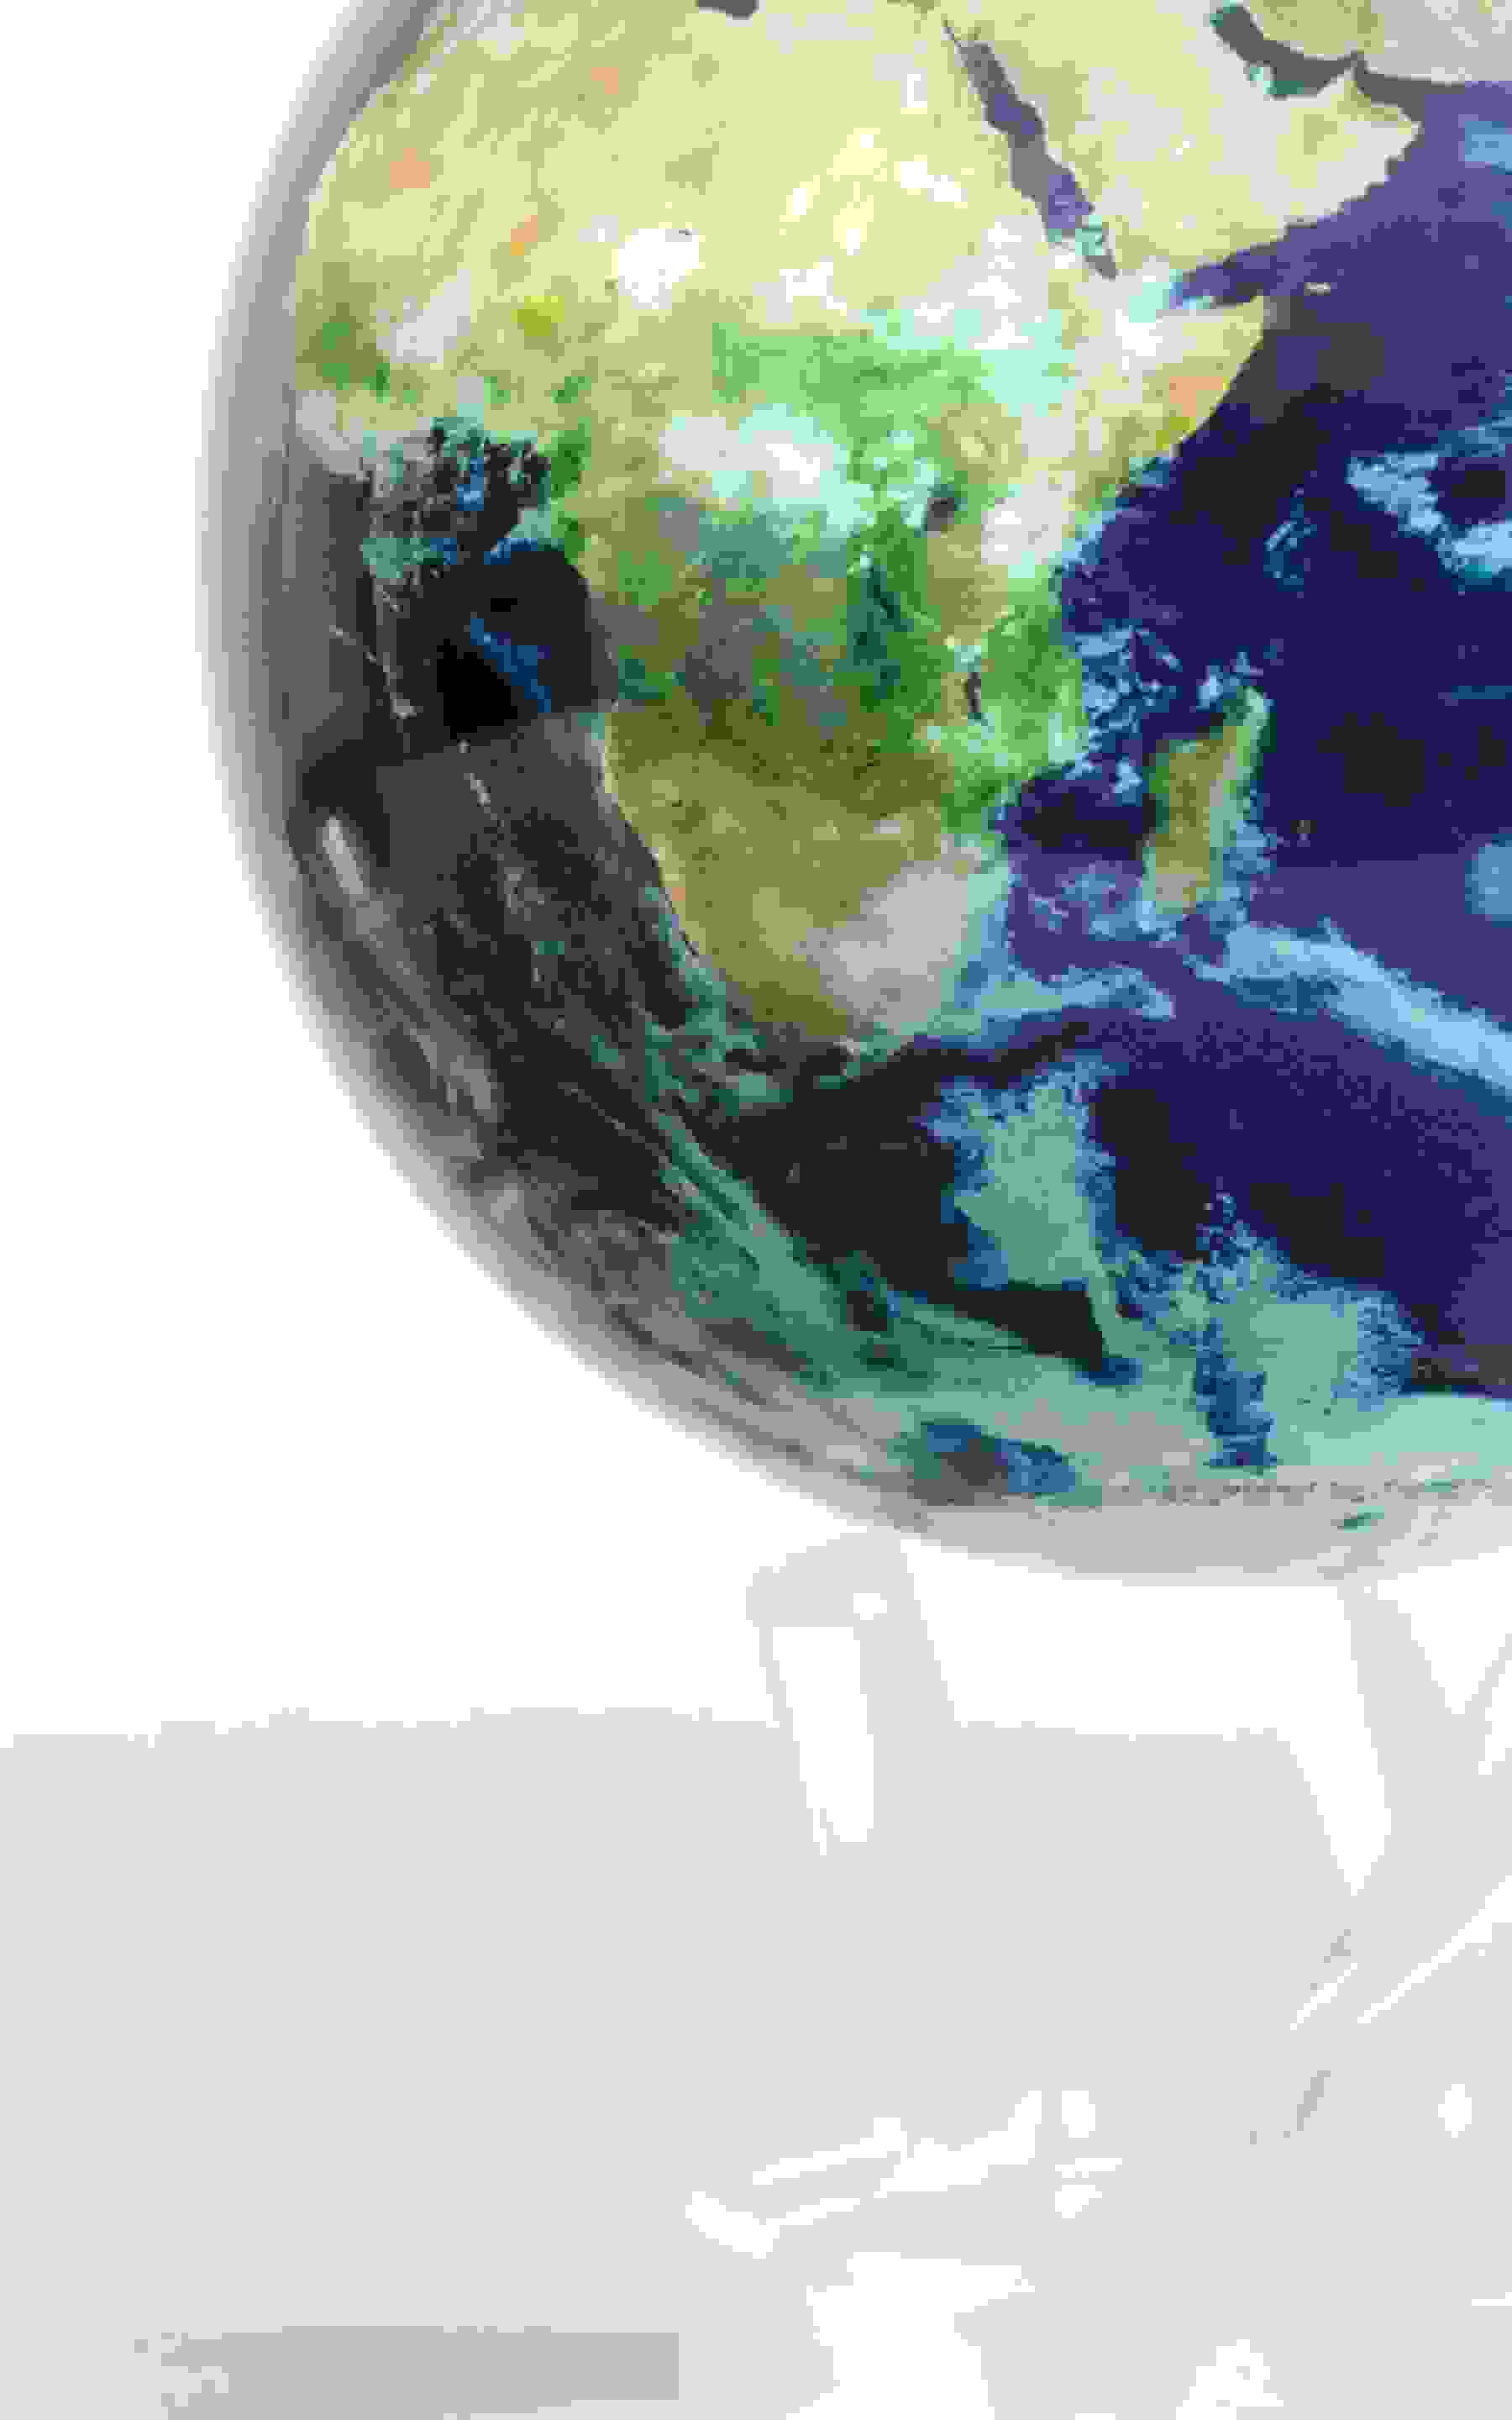 Mova Globe Earth & Clouds 8,5 inch w/ Acrylic Base MG-85-STE-C